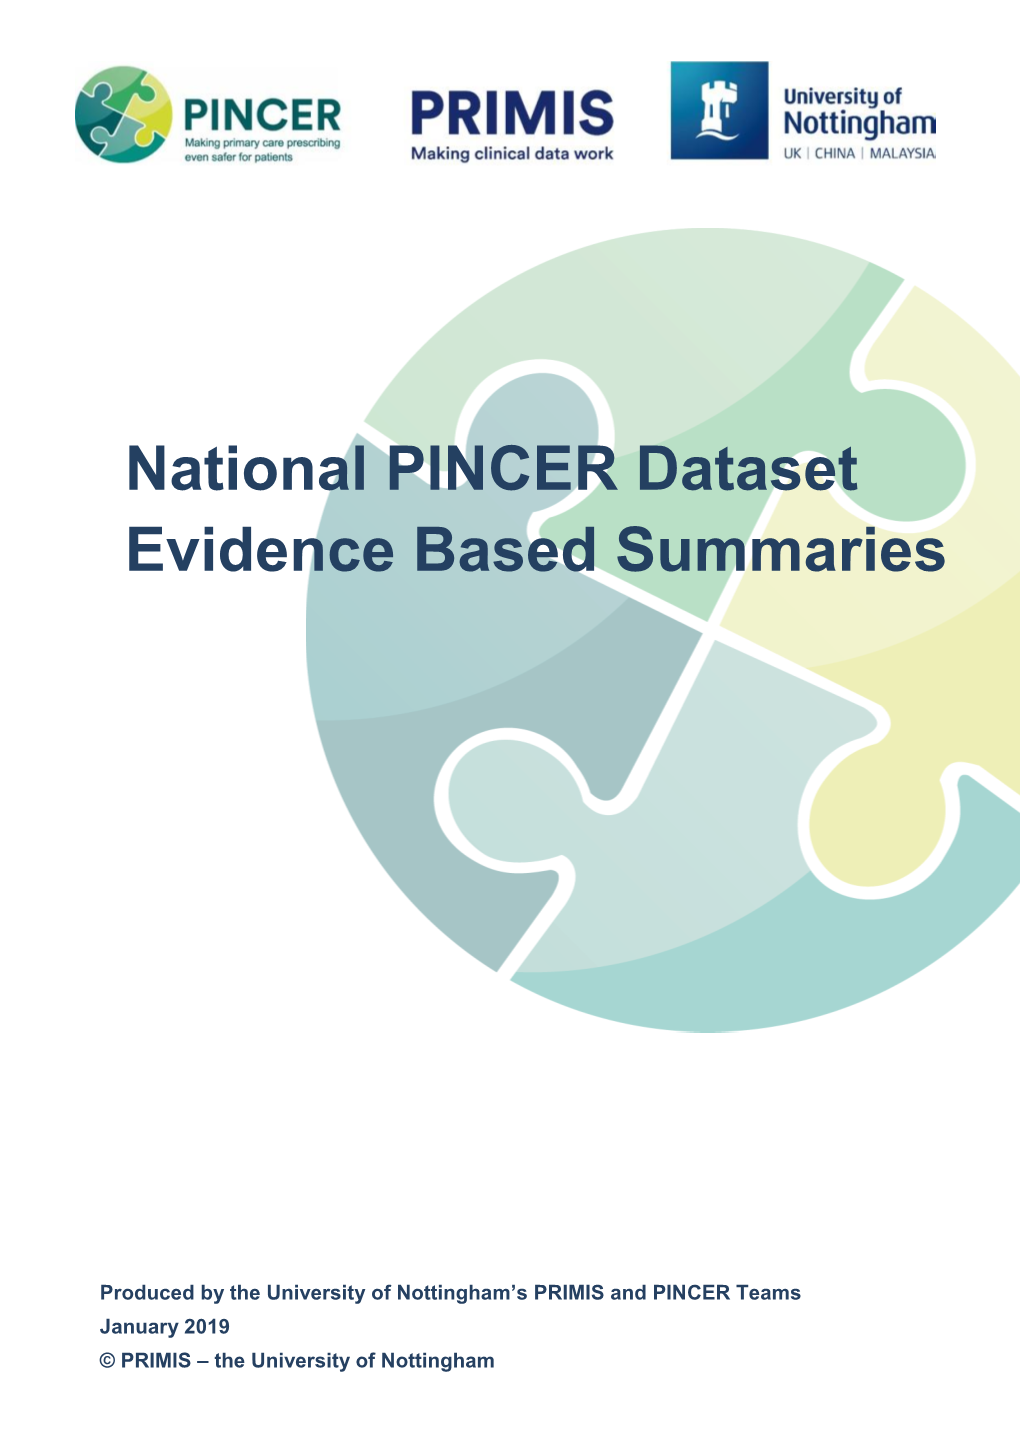 National PINCER Dataset Evidence Based Summaries